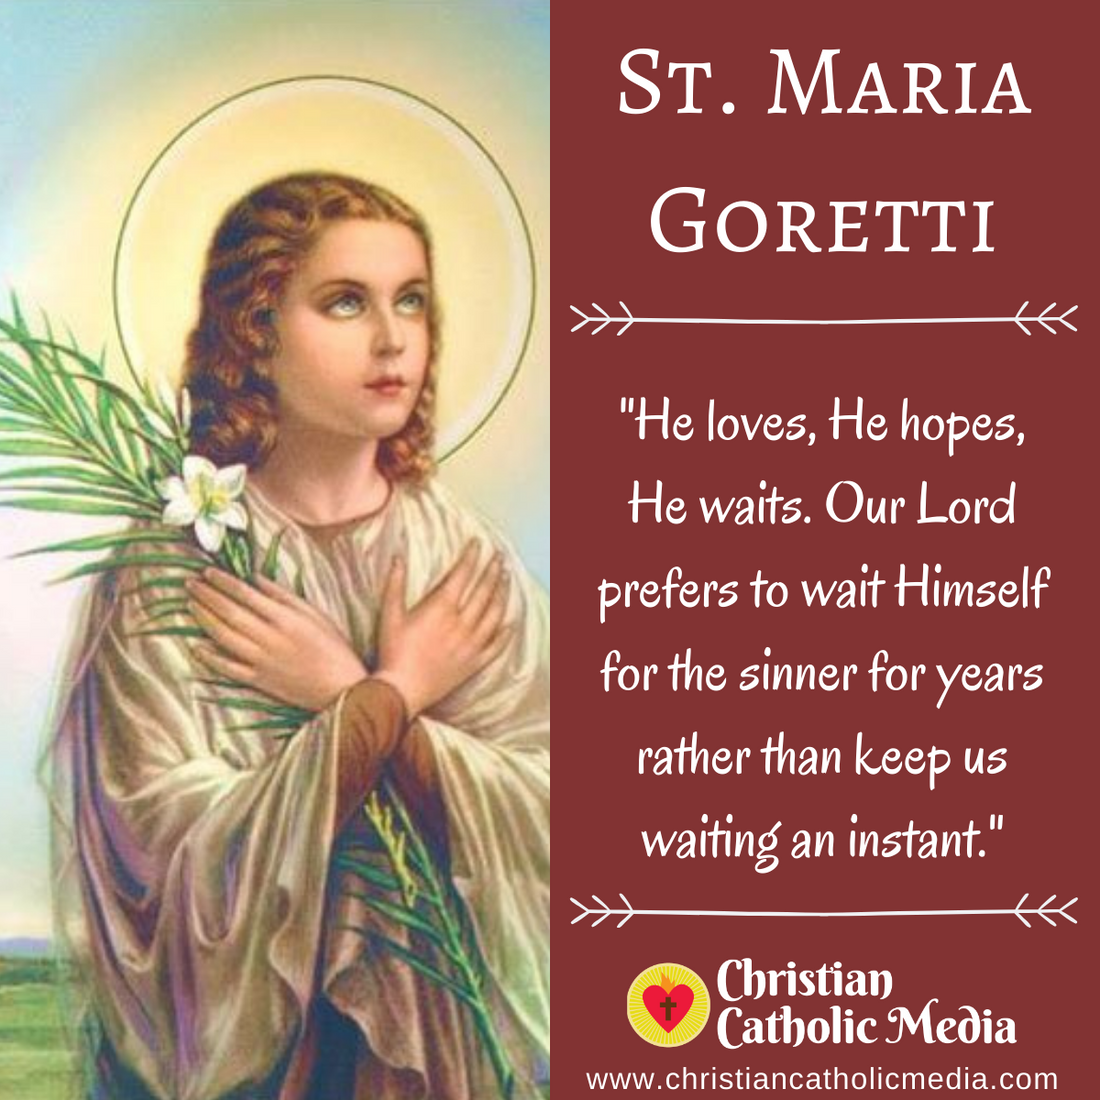 St. Maria Goretti - Wednesday July 6, 2022